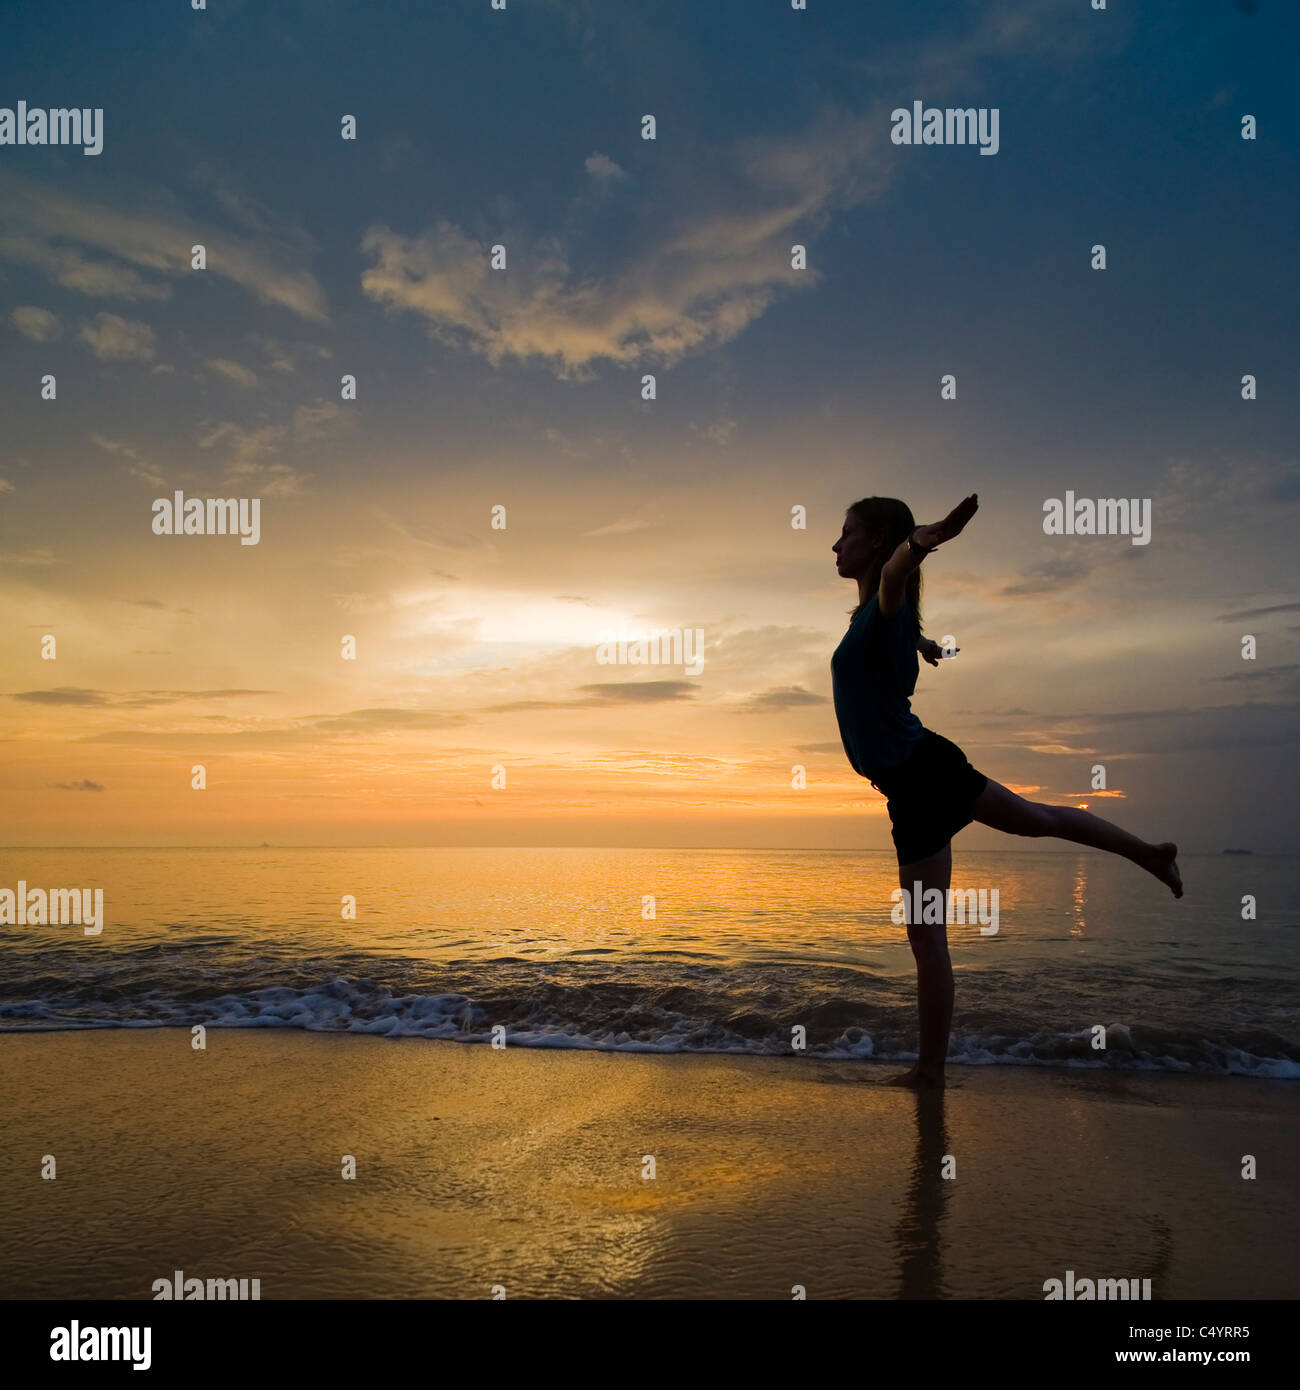 A young woman doing yoga exercises on the beach at sunset.Taken on Phra Ae Beach (Long Beach), Koh Lanta (Lanta Island),Thailand Stock Photo